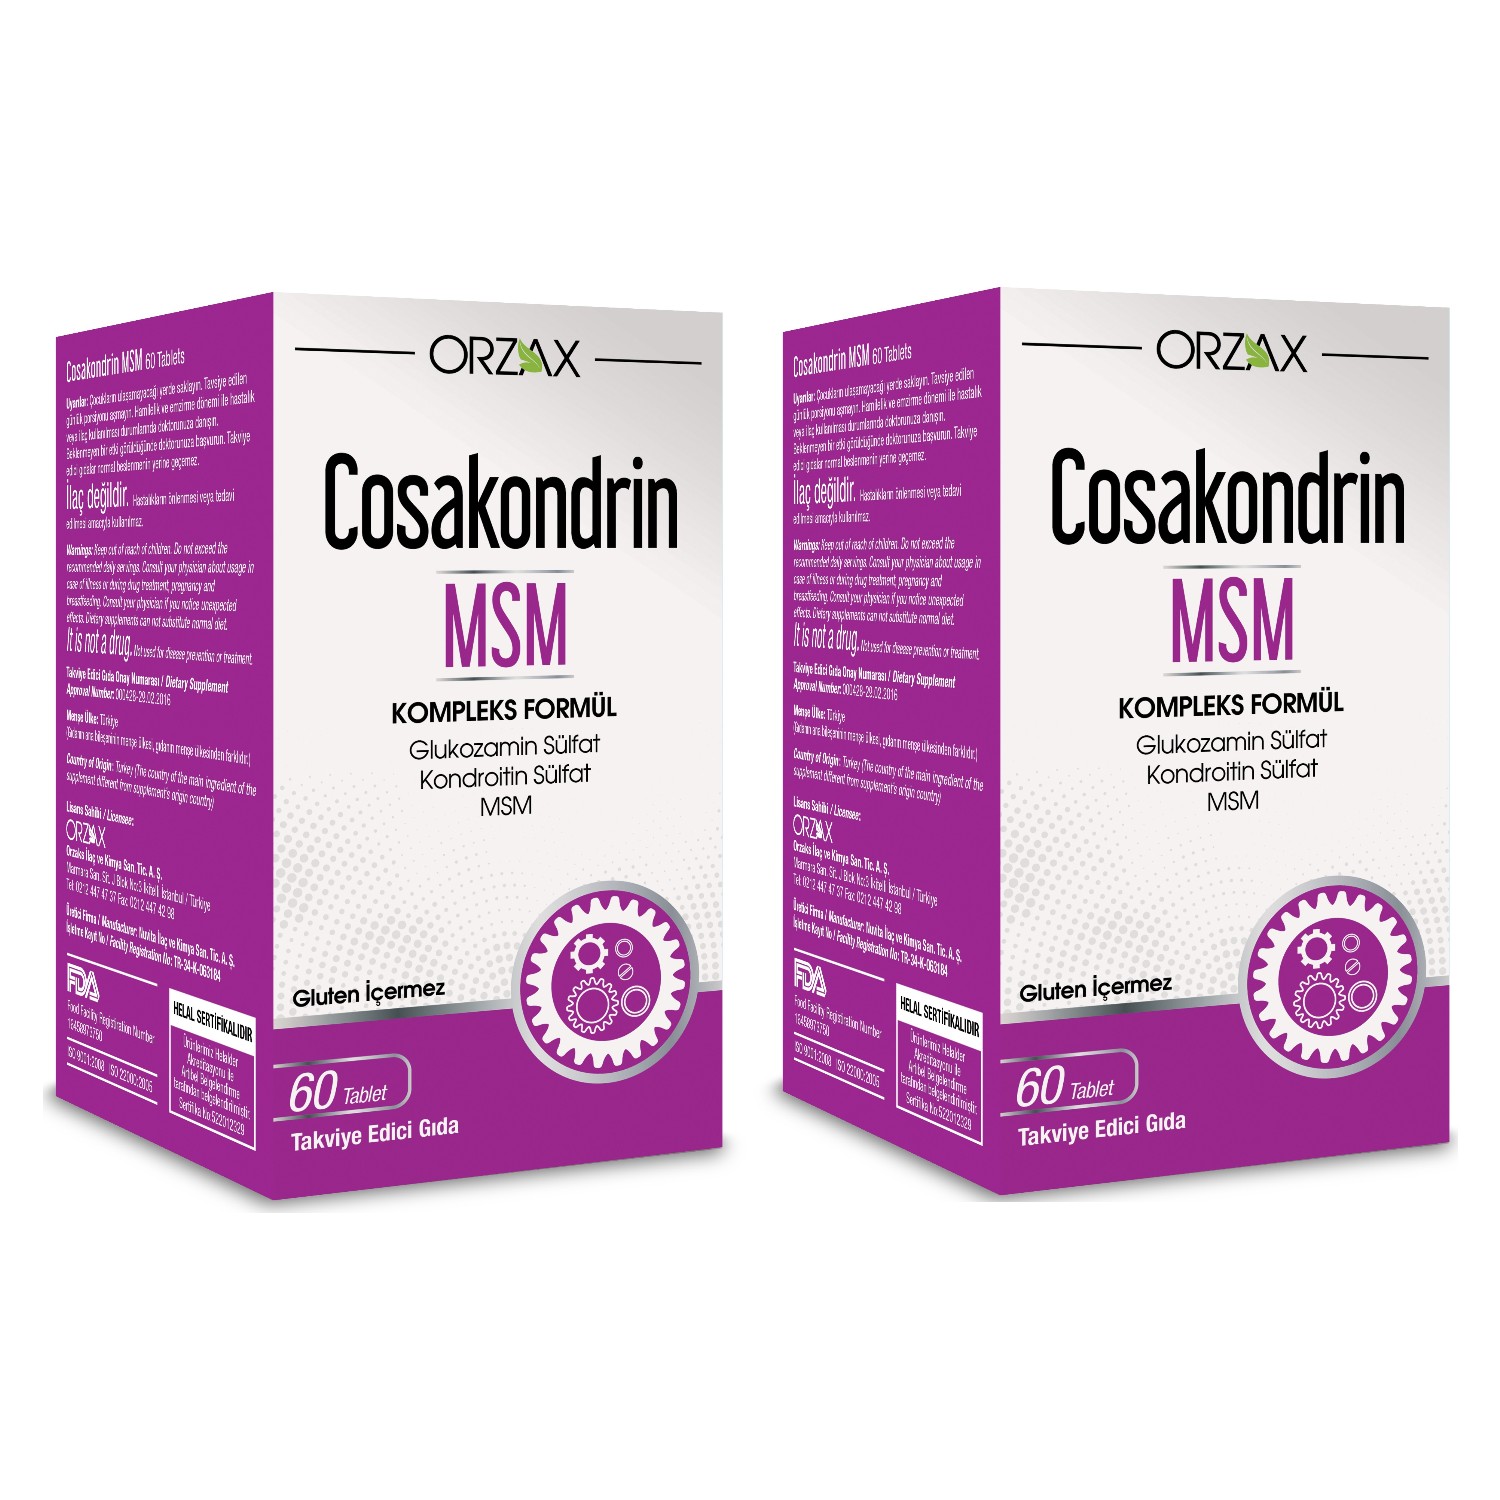 Пищевая добавка Orzax Cosakondrin Msm, 2 упаковки по 60 таблеток пищевая добавка orzax cosakondrin msm 60 таблеток